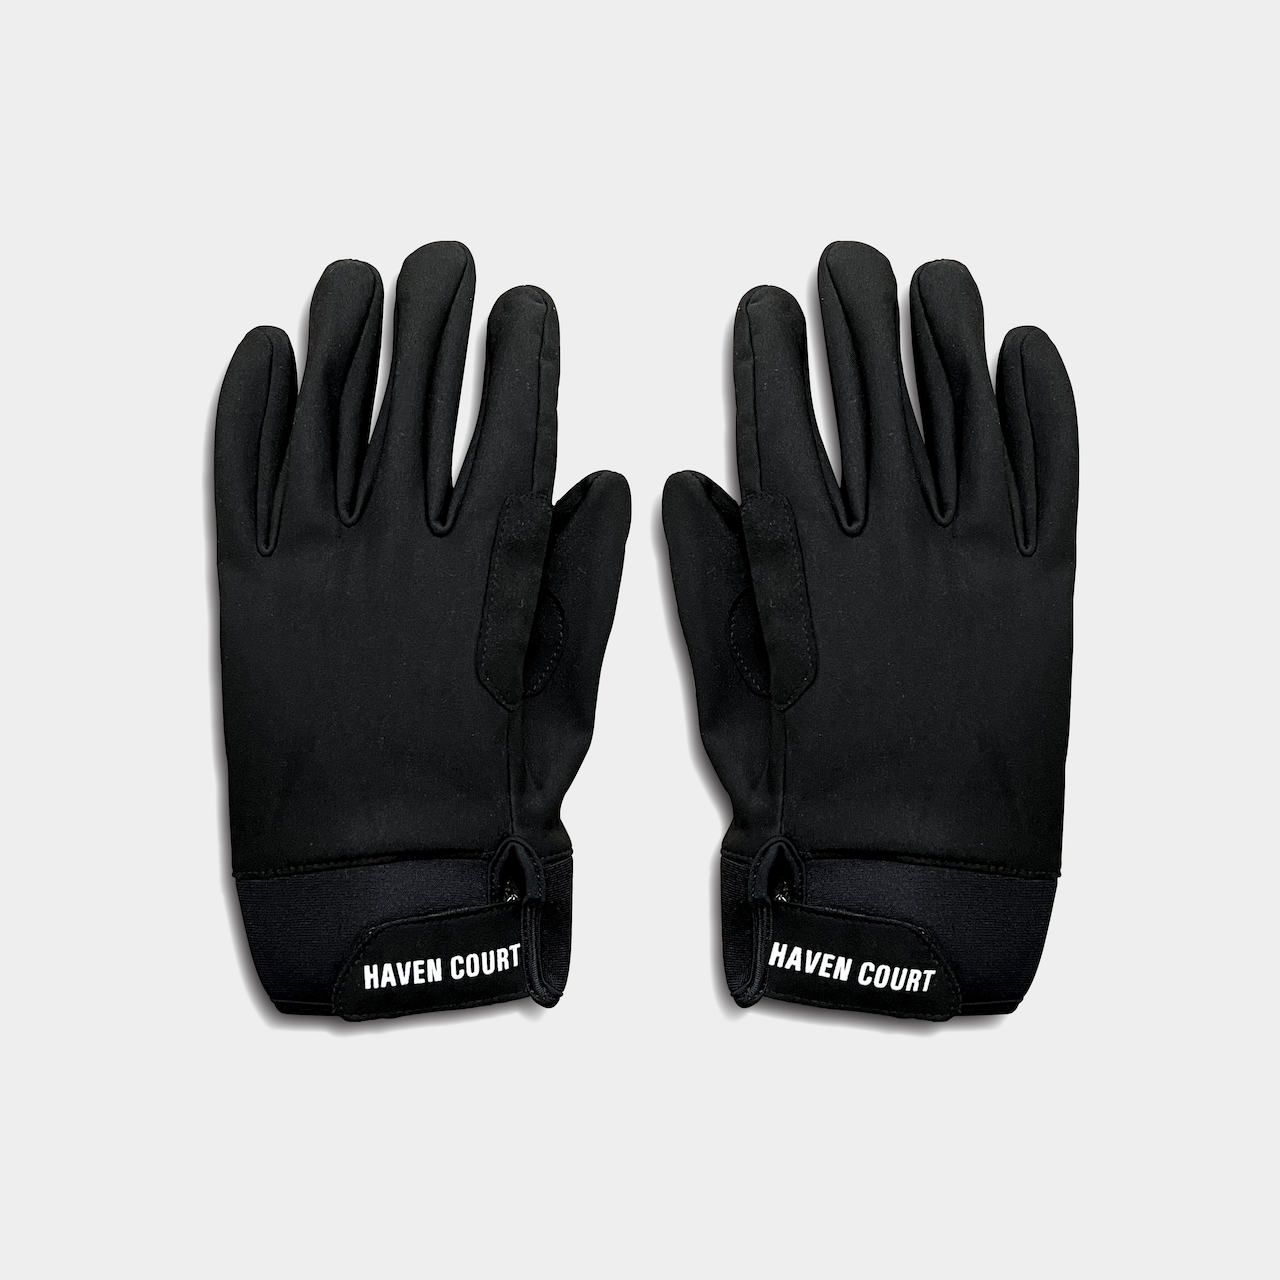 TG Burner Gloves